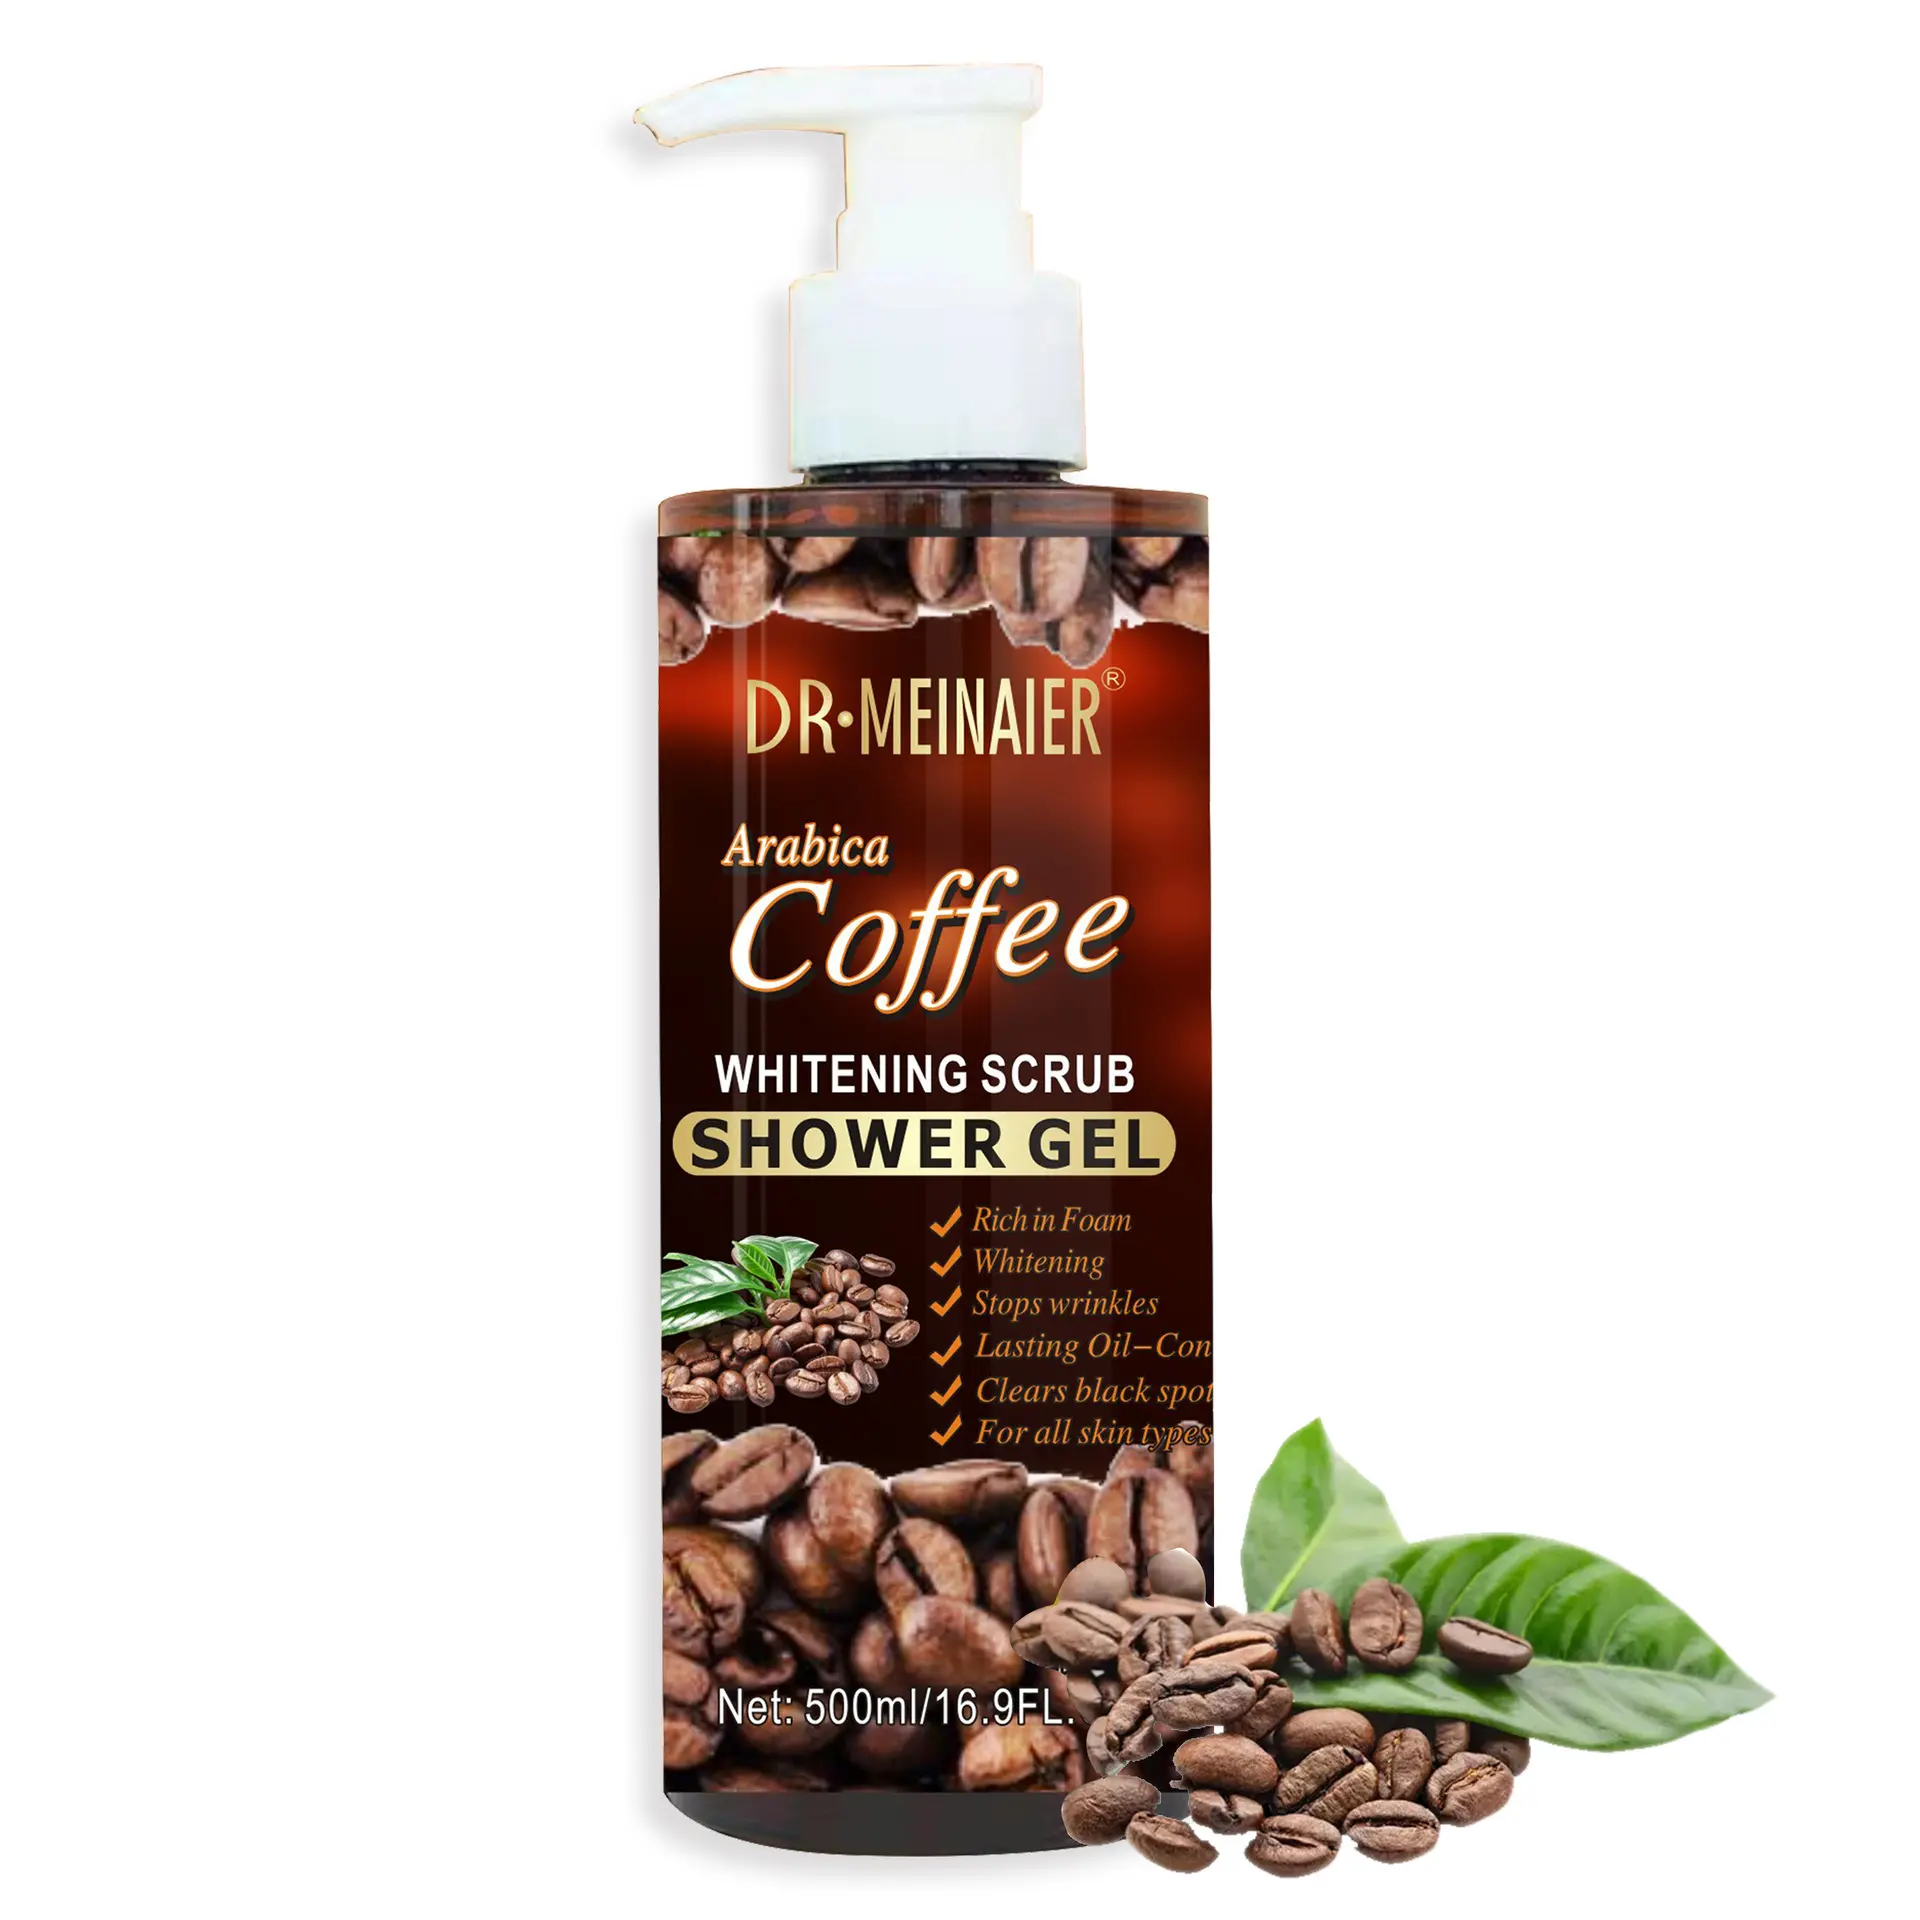 Private Label Bio-Kaffee Dusch gel 500ml Body Wash Benutzer definierte White ning Peeling Bades eife